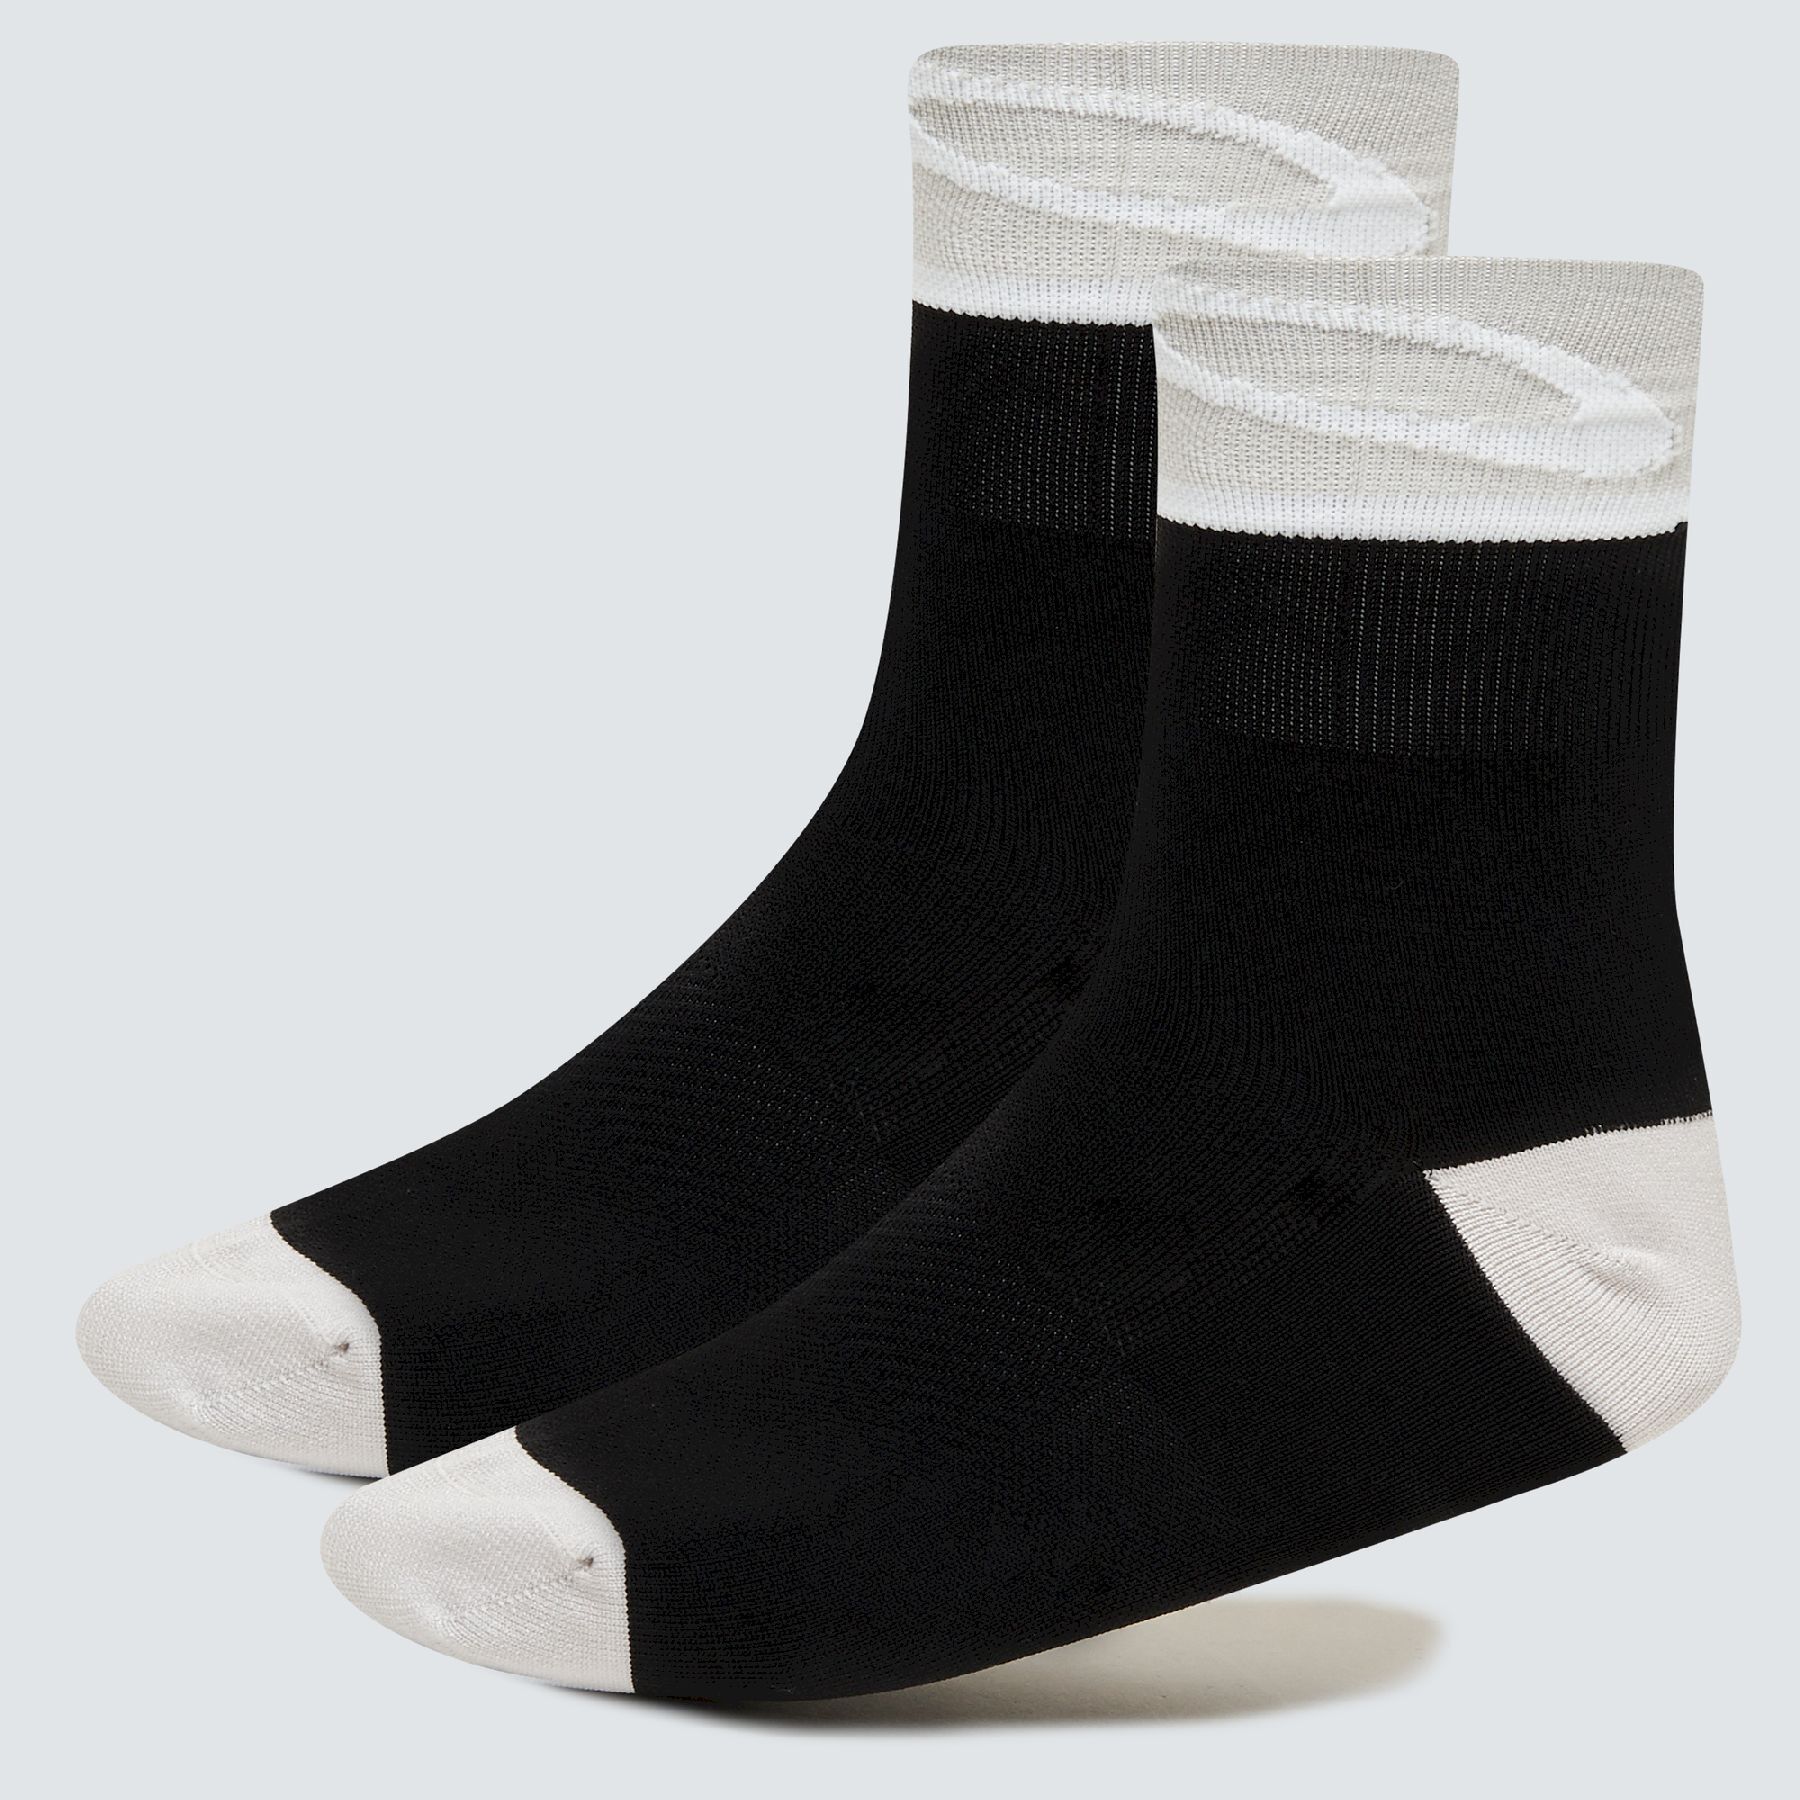 Oakley Socks 3.0 - Sockor